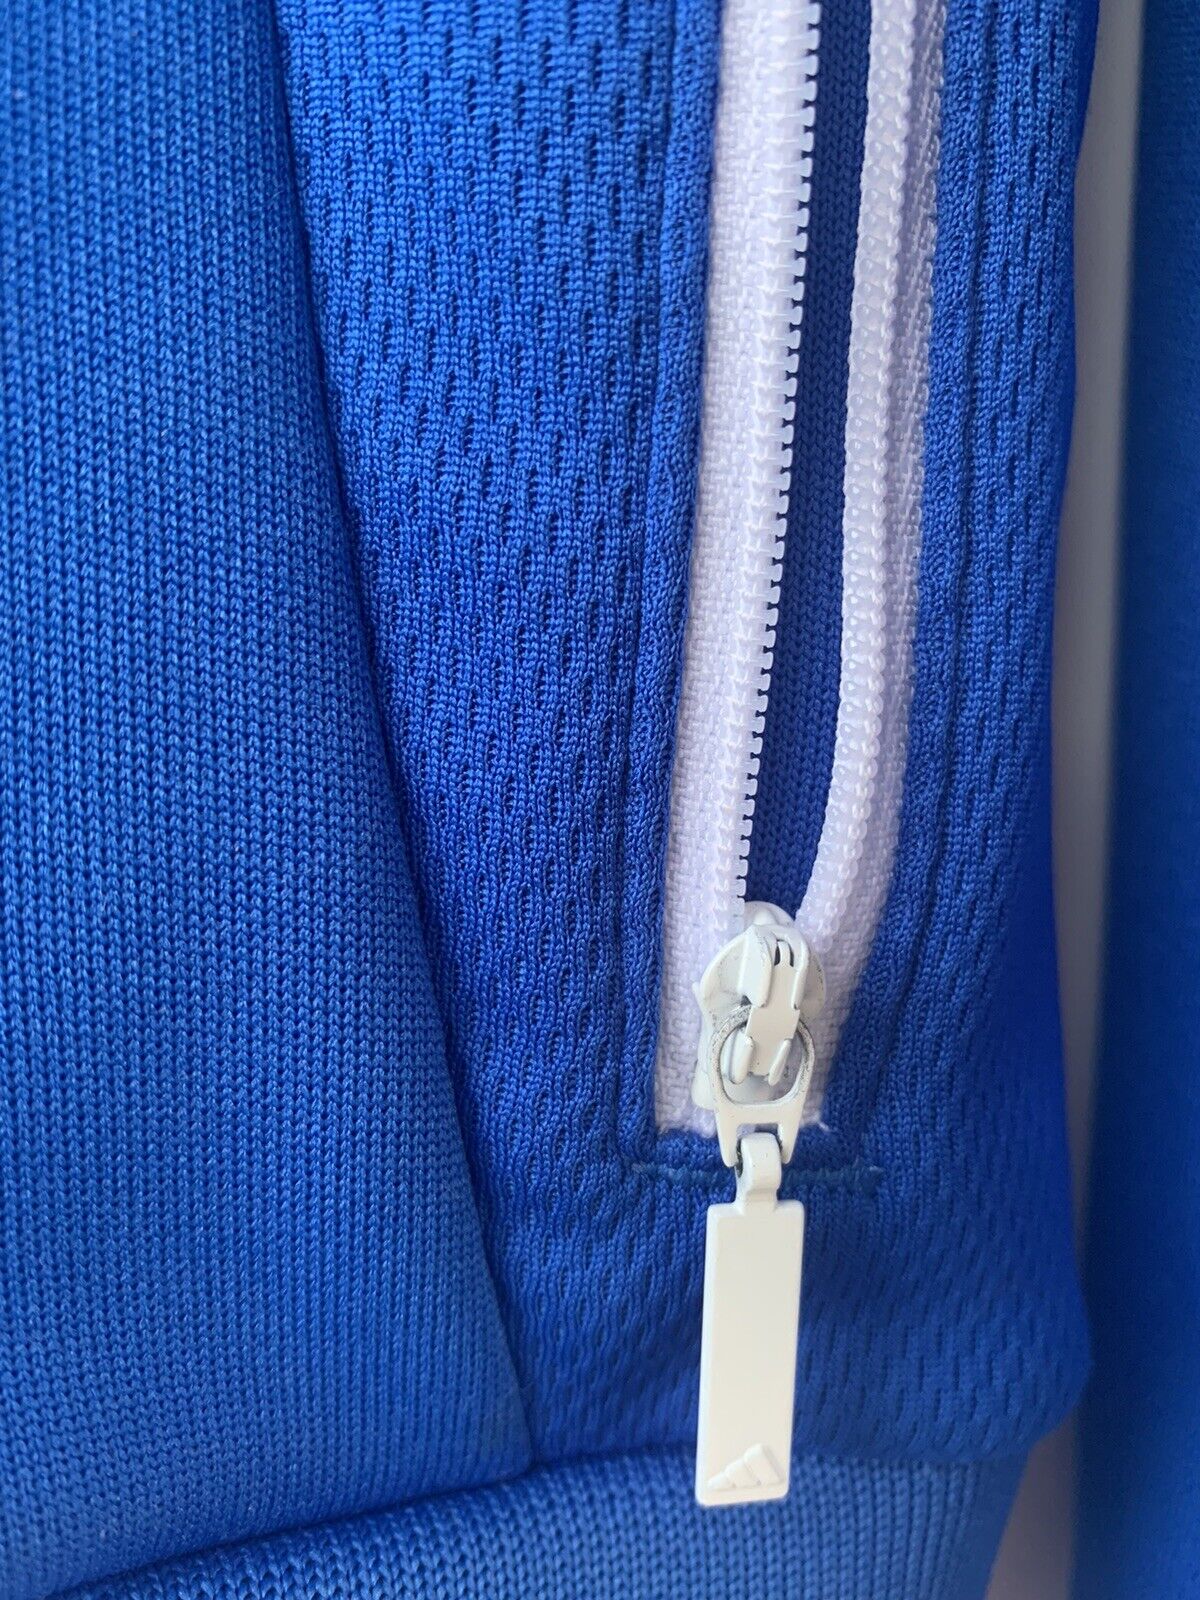 Rare Adidas JFA Japan Soccer Track Jacket Full Zip Size M